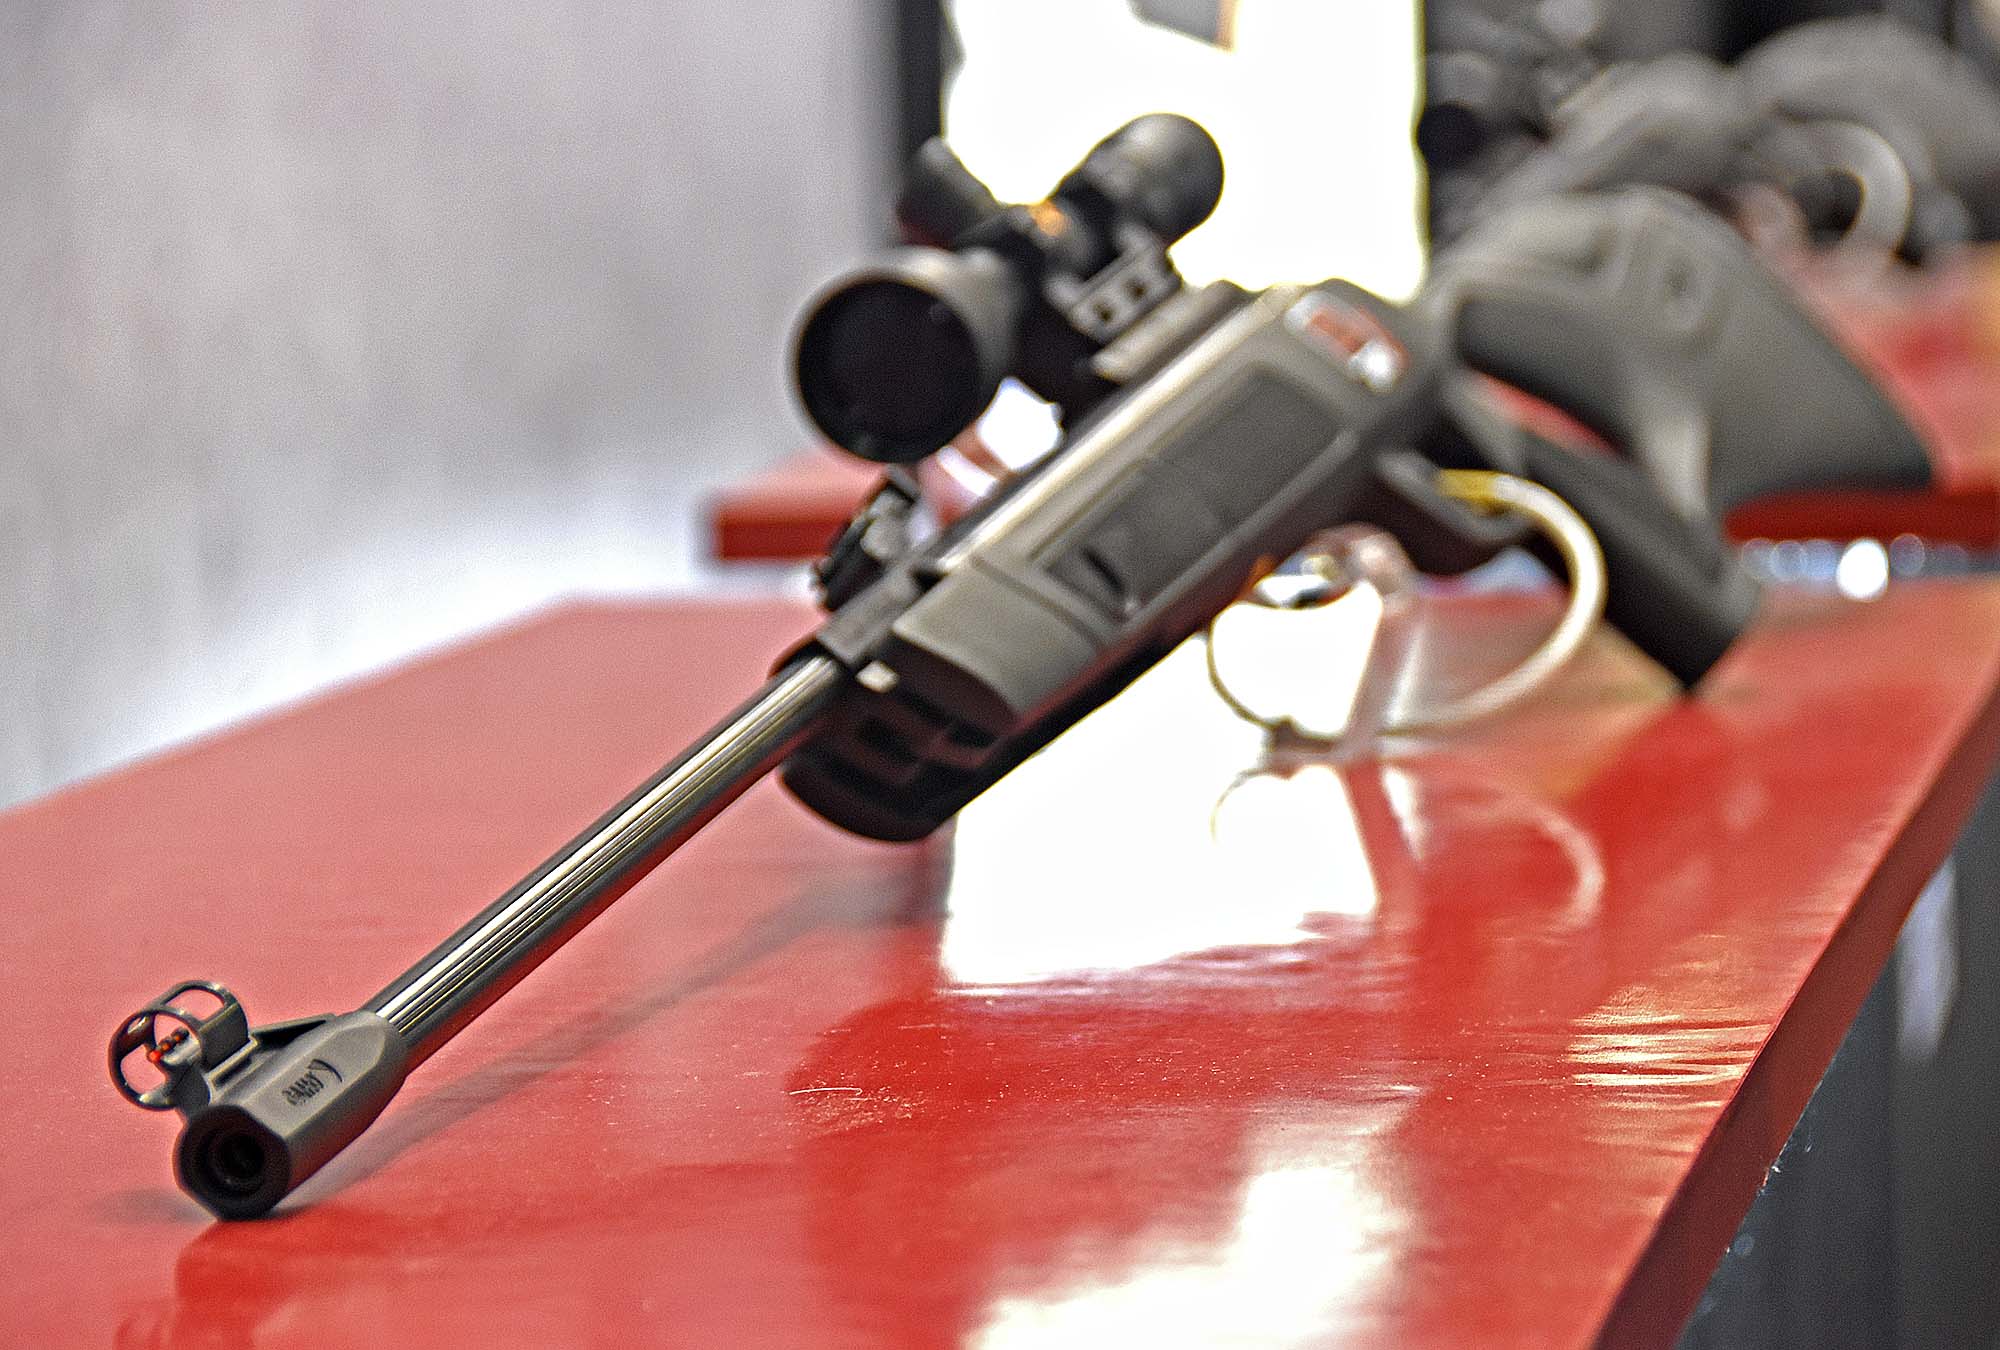 Rifle Aire Comprimido Gamo G Magnum 1250 IGT